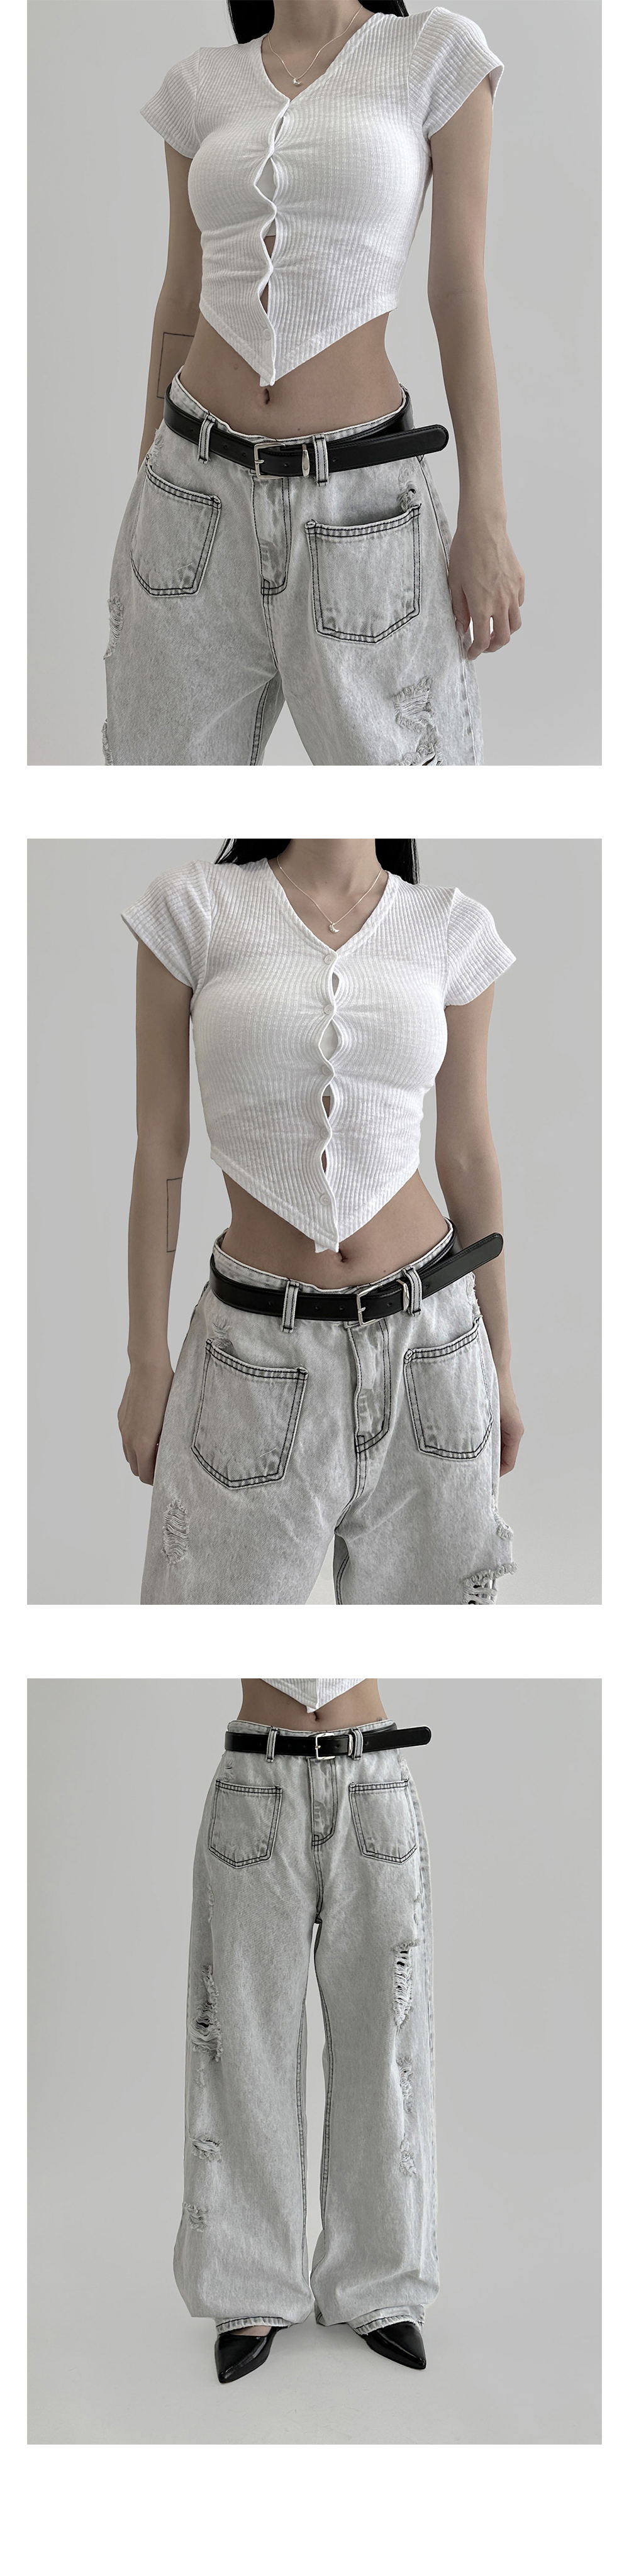 suspenders skirt/pants grey color image-S1L11